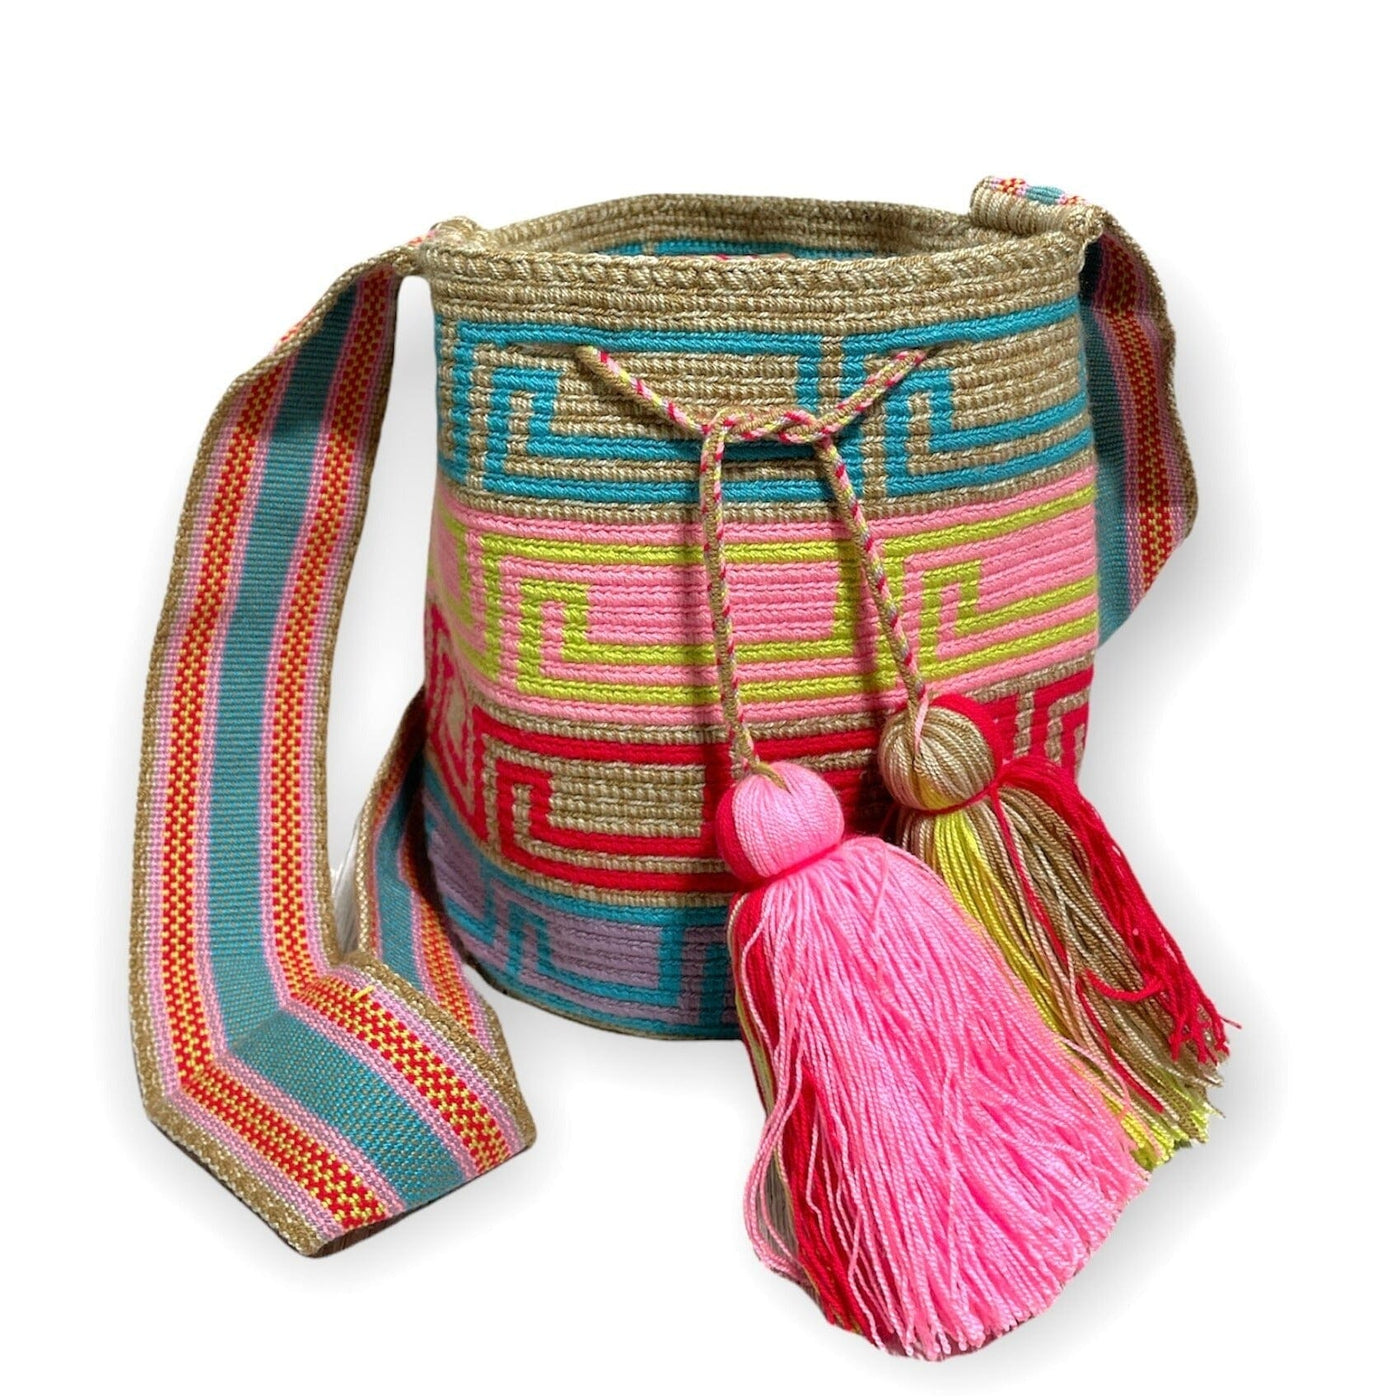  Pink/Teal Boho Beach Bag | Crossbody Spring/summer crochet bag | Colorful 4U